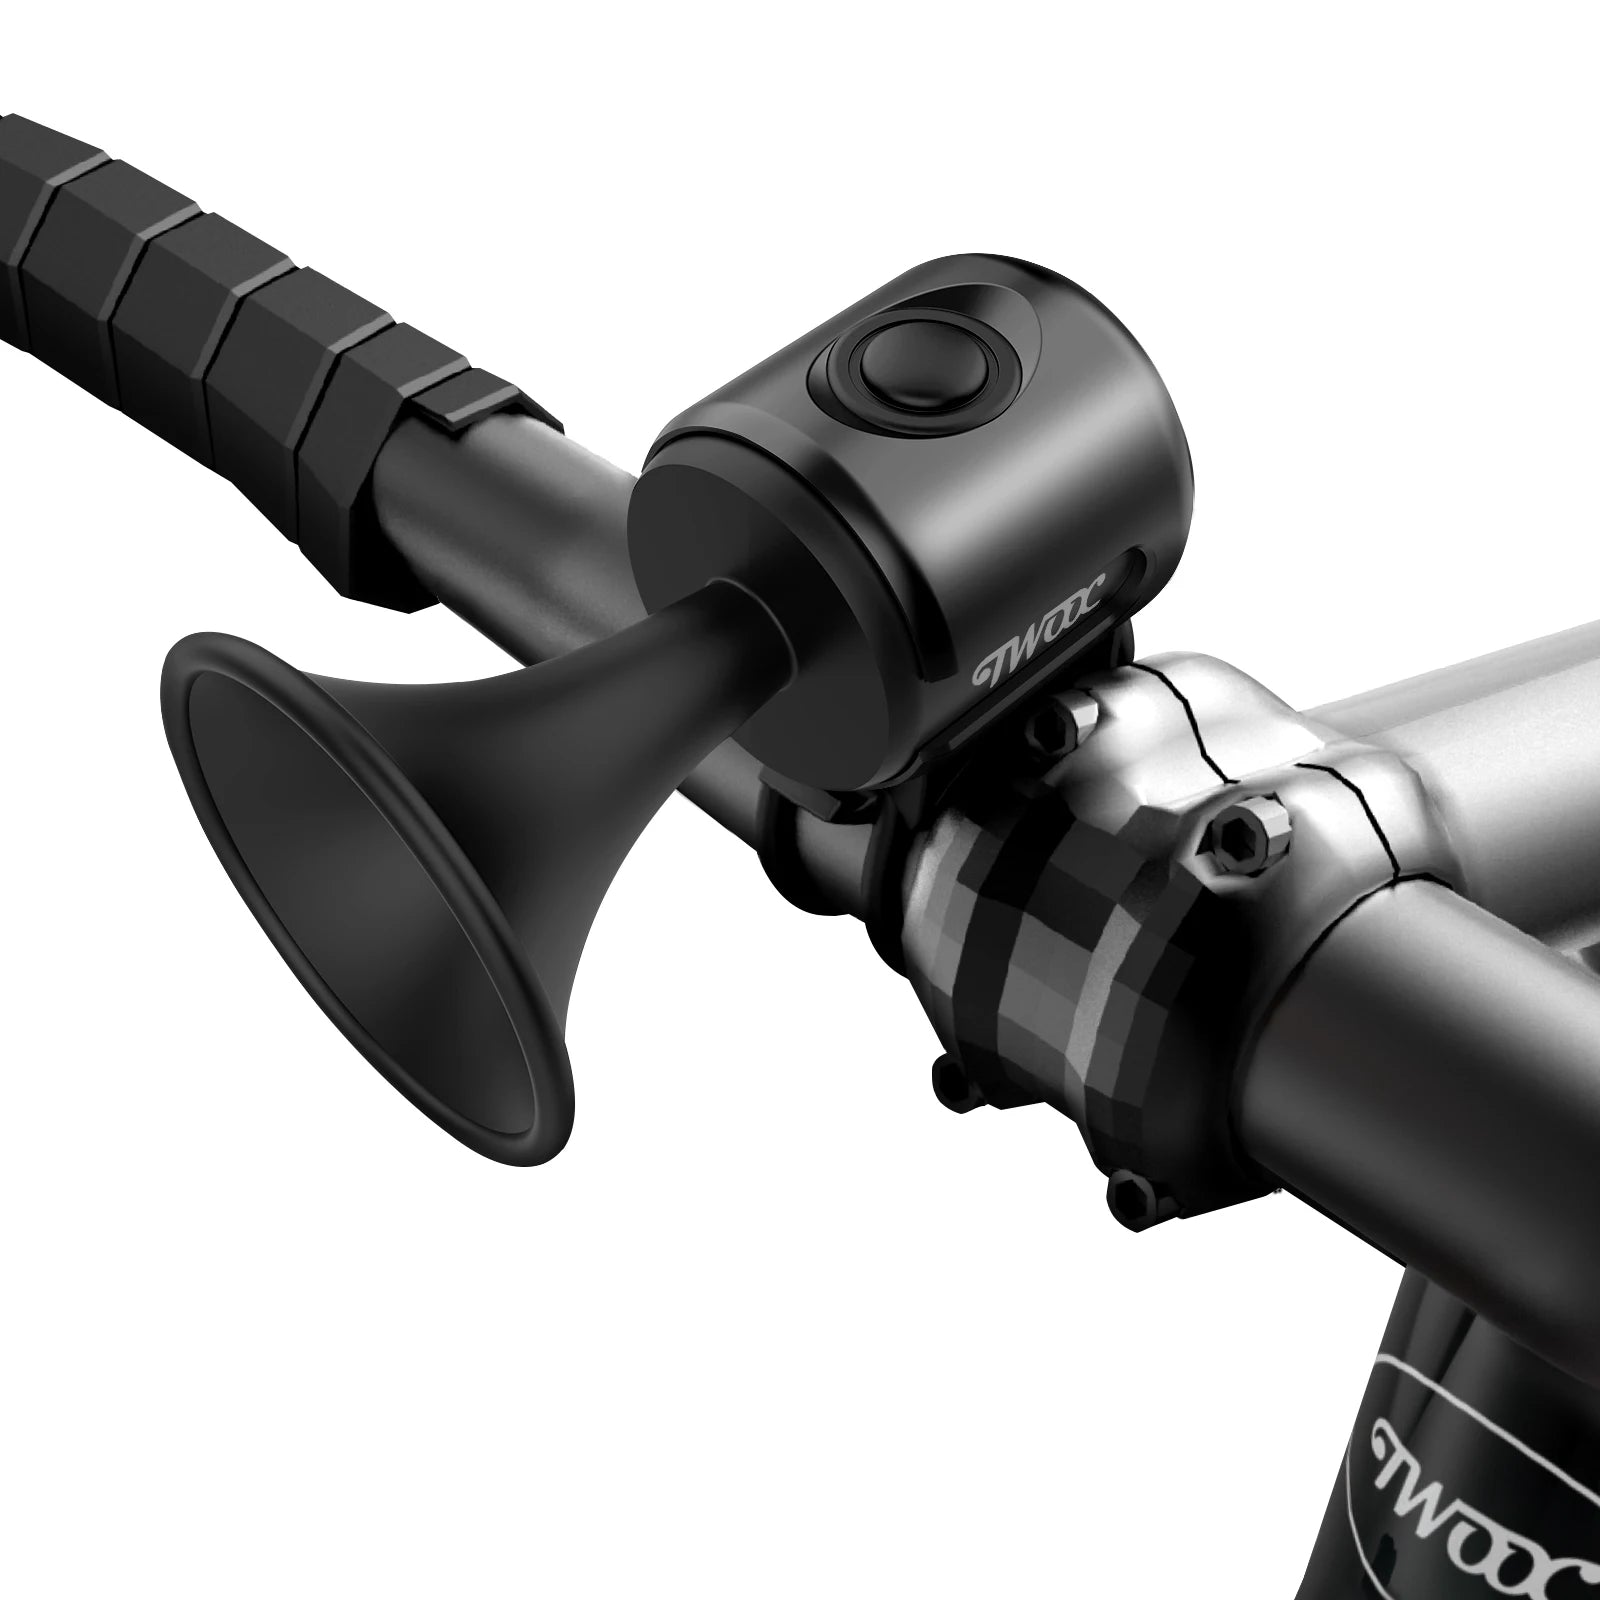 Waterproof Electric Bike Horn satsunsport